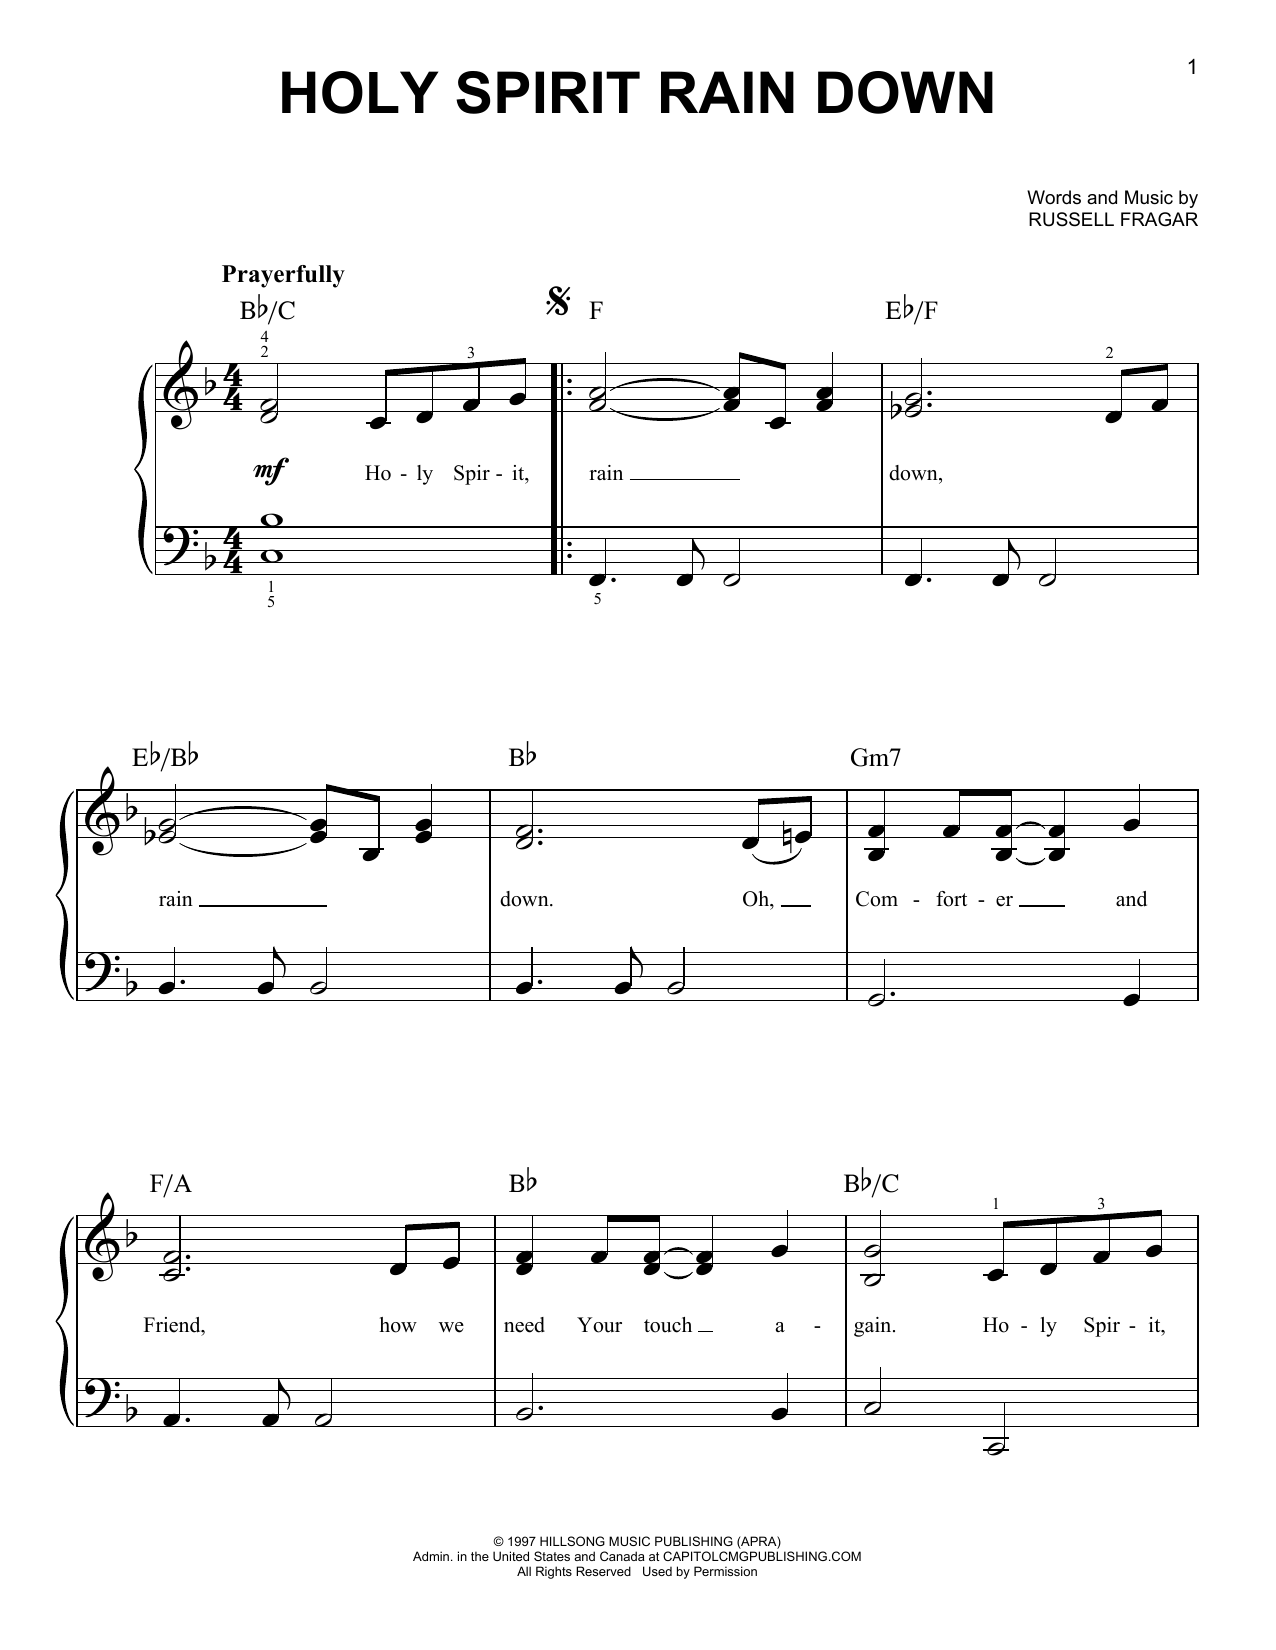 Russell Fragar Holy Spirit Rain Down Sheet Music Notes & Chords for Guitar Tab - Download or Print PDF